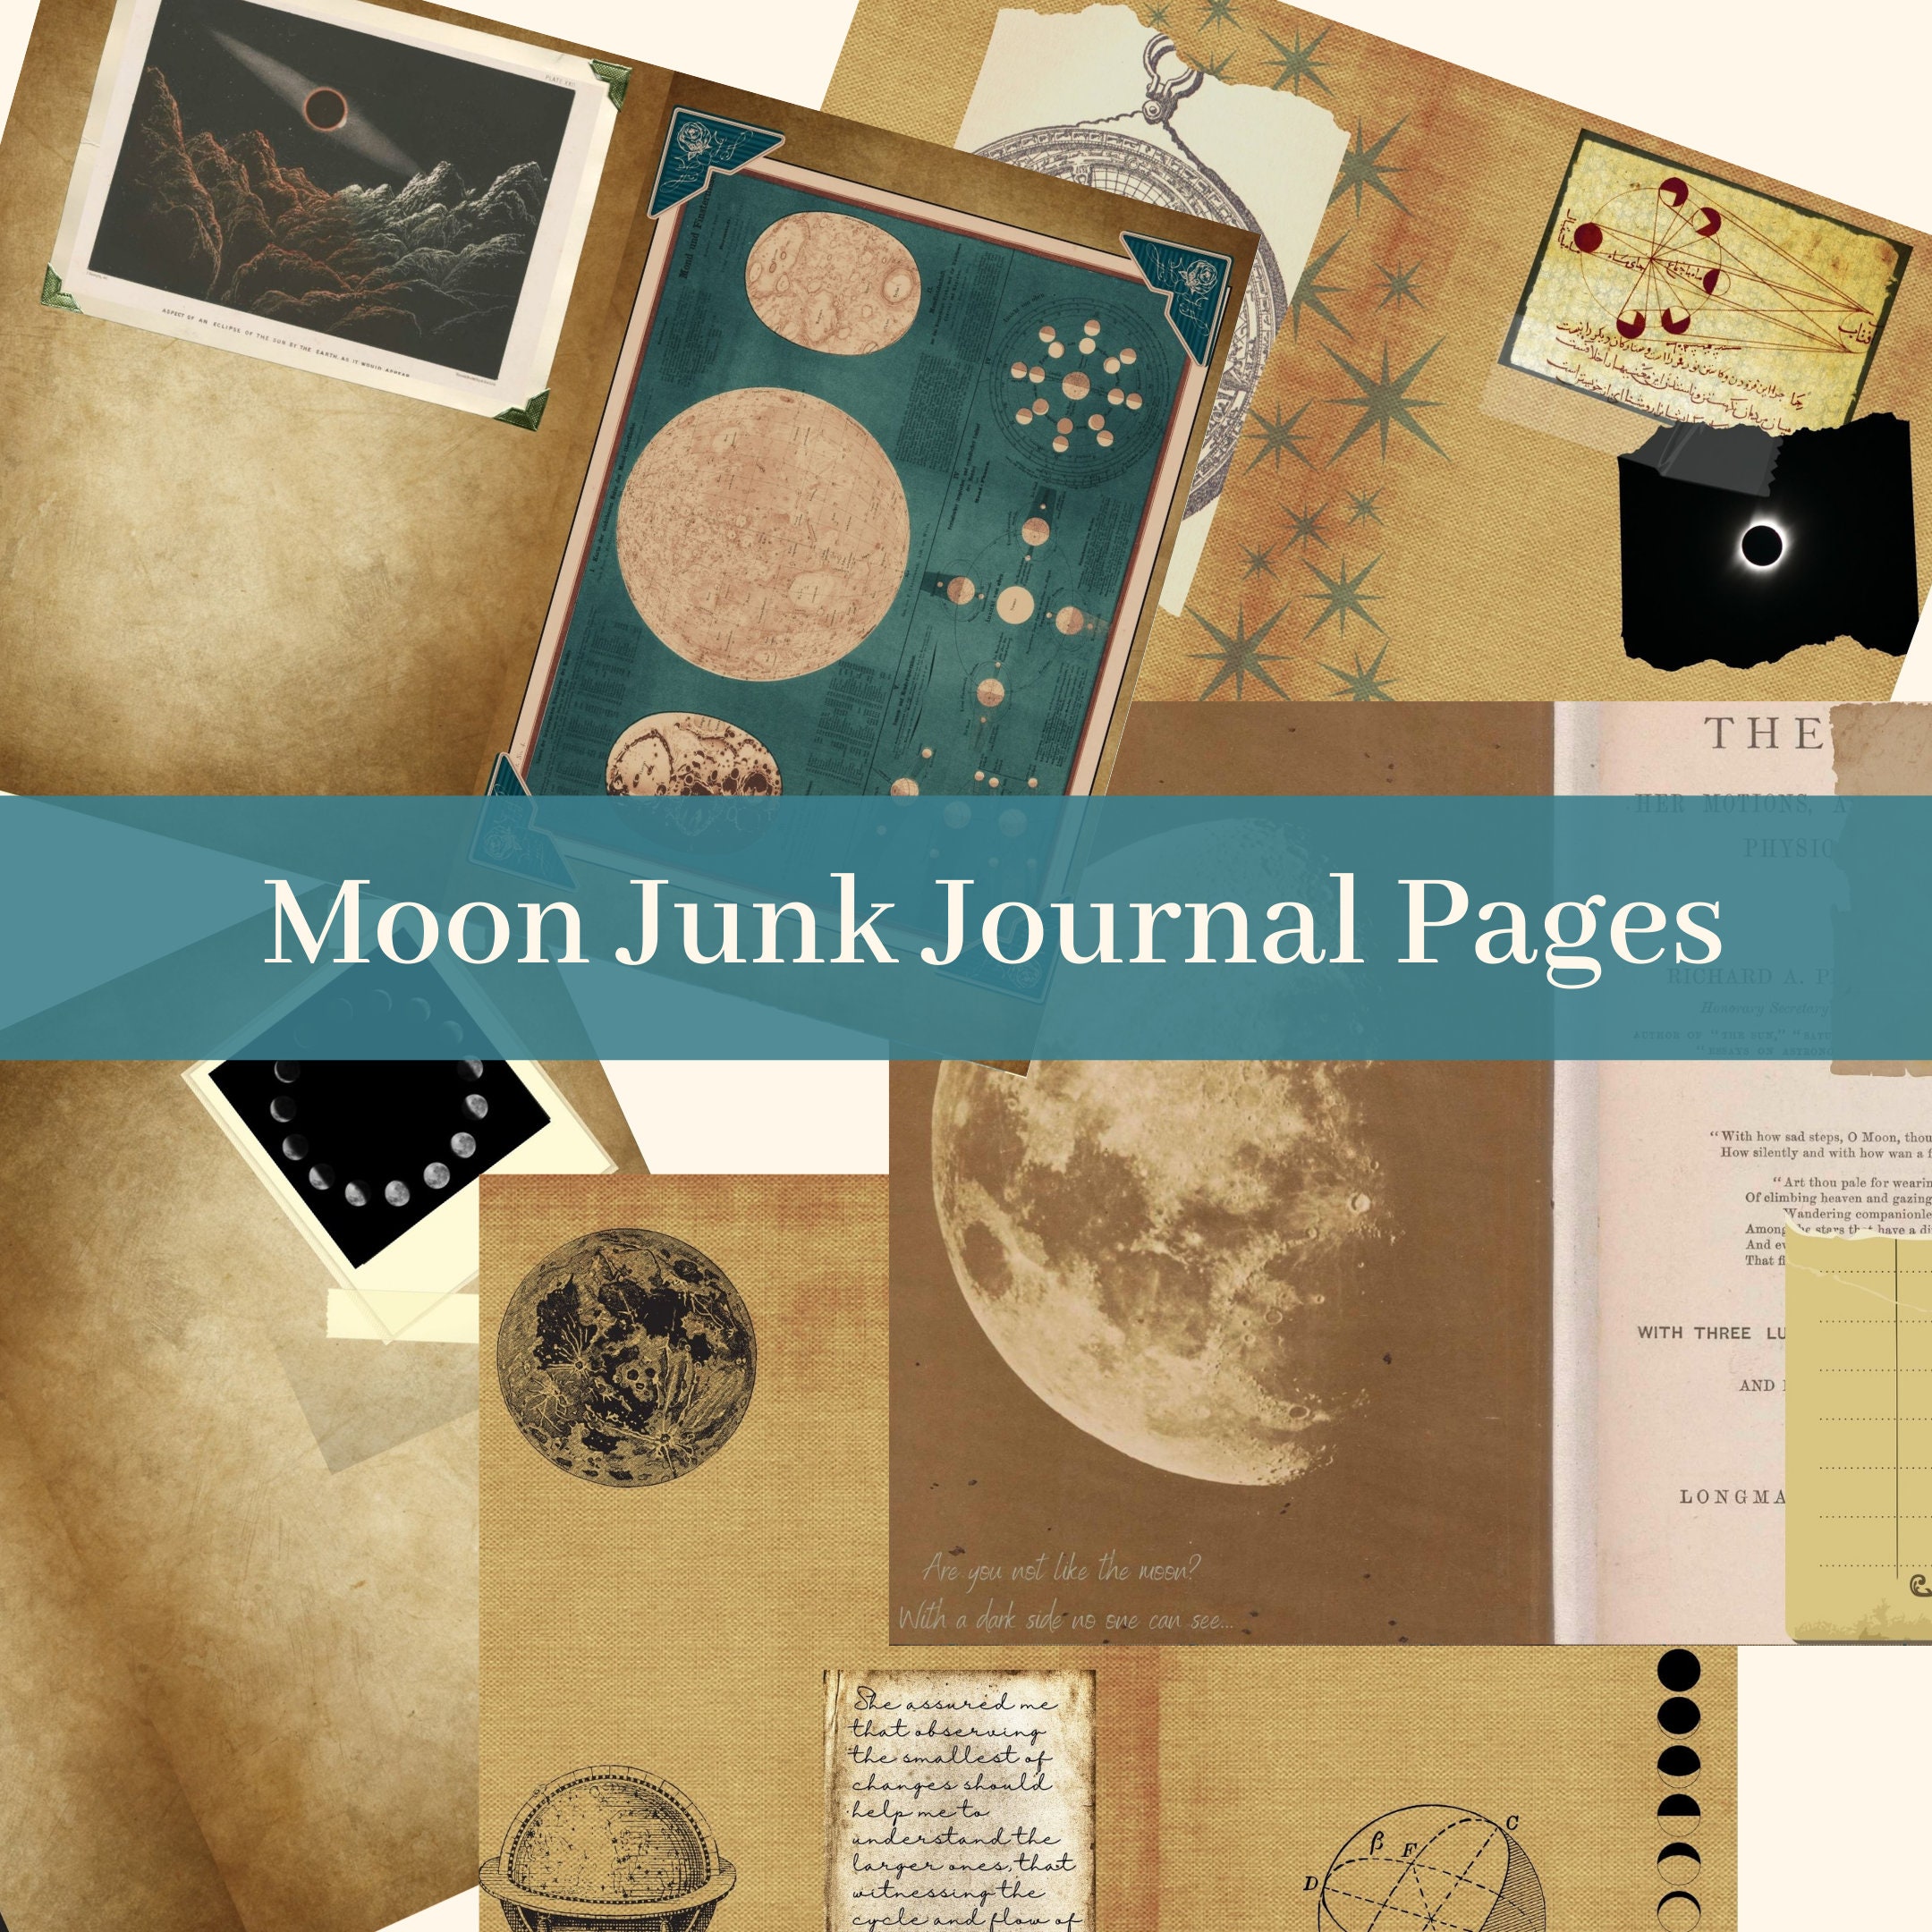 Visual Journal, Junk Journal Ideas - Look between the lines